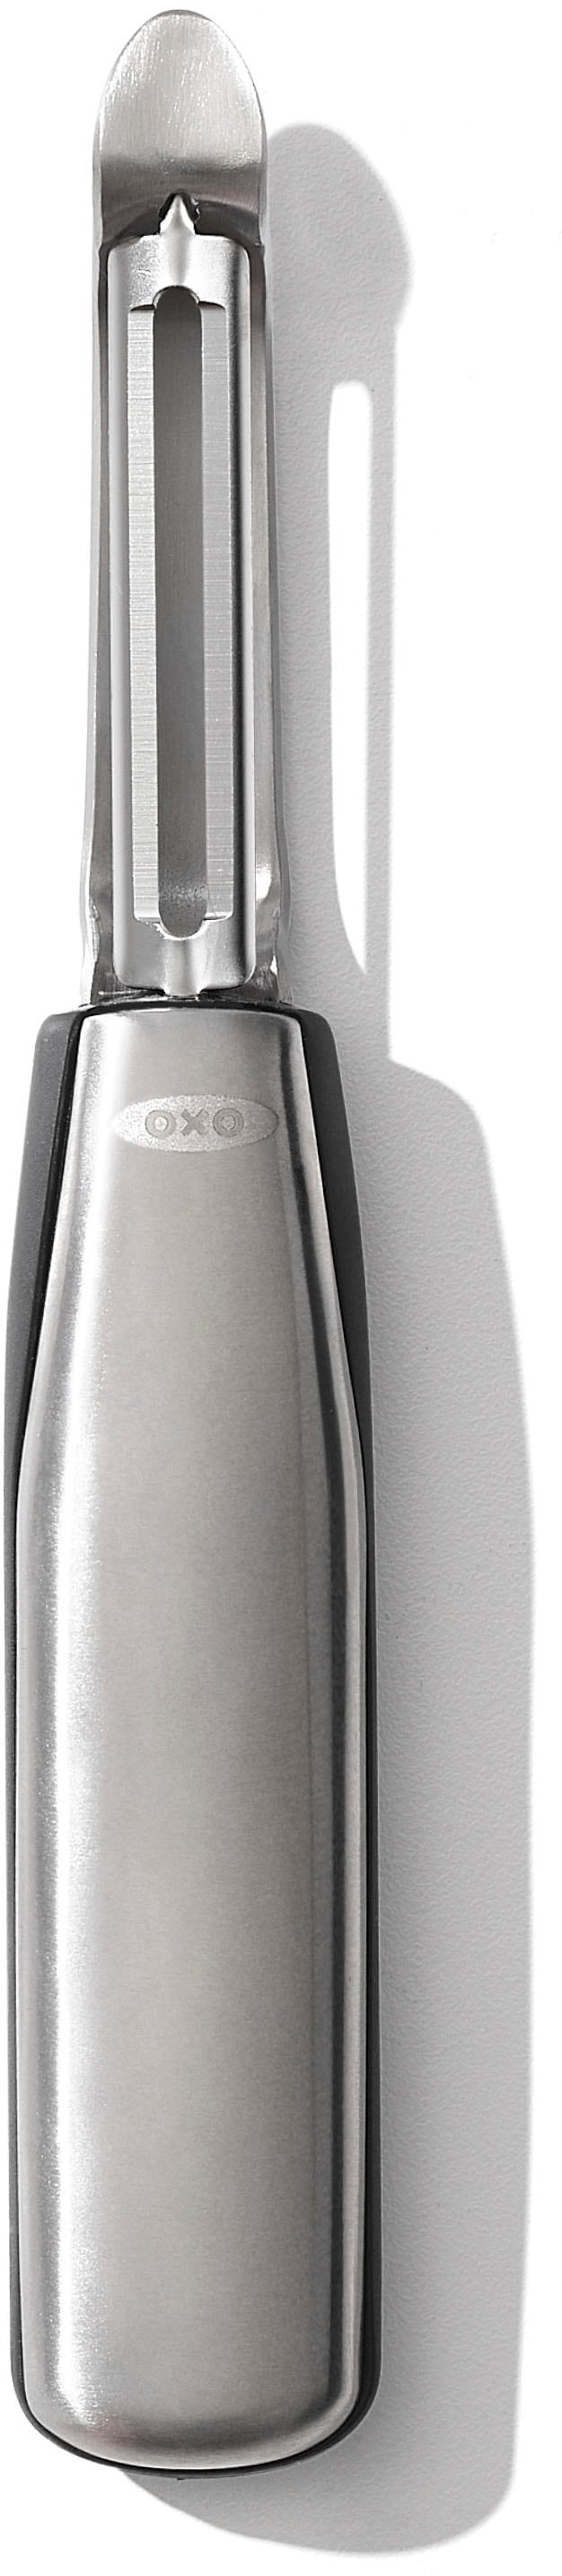 OXO Good Grips Kartoffelschäler, integrierte Kartoffelaugenentferner, Edelstahl